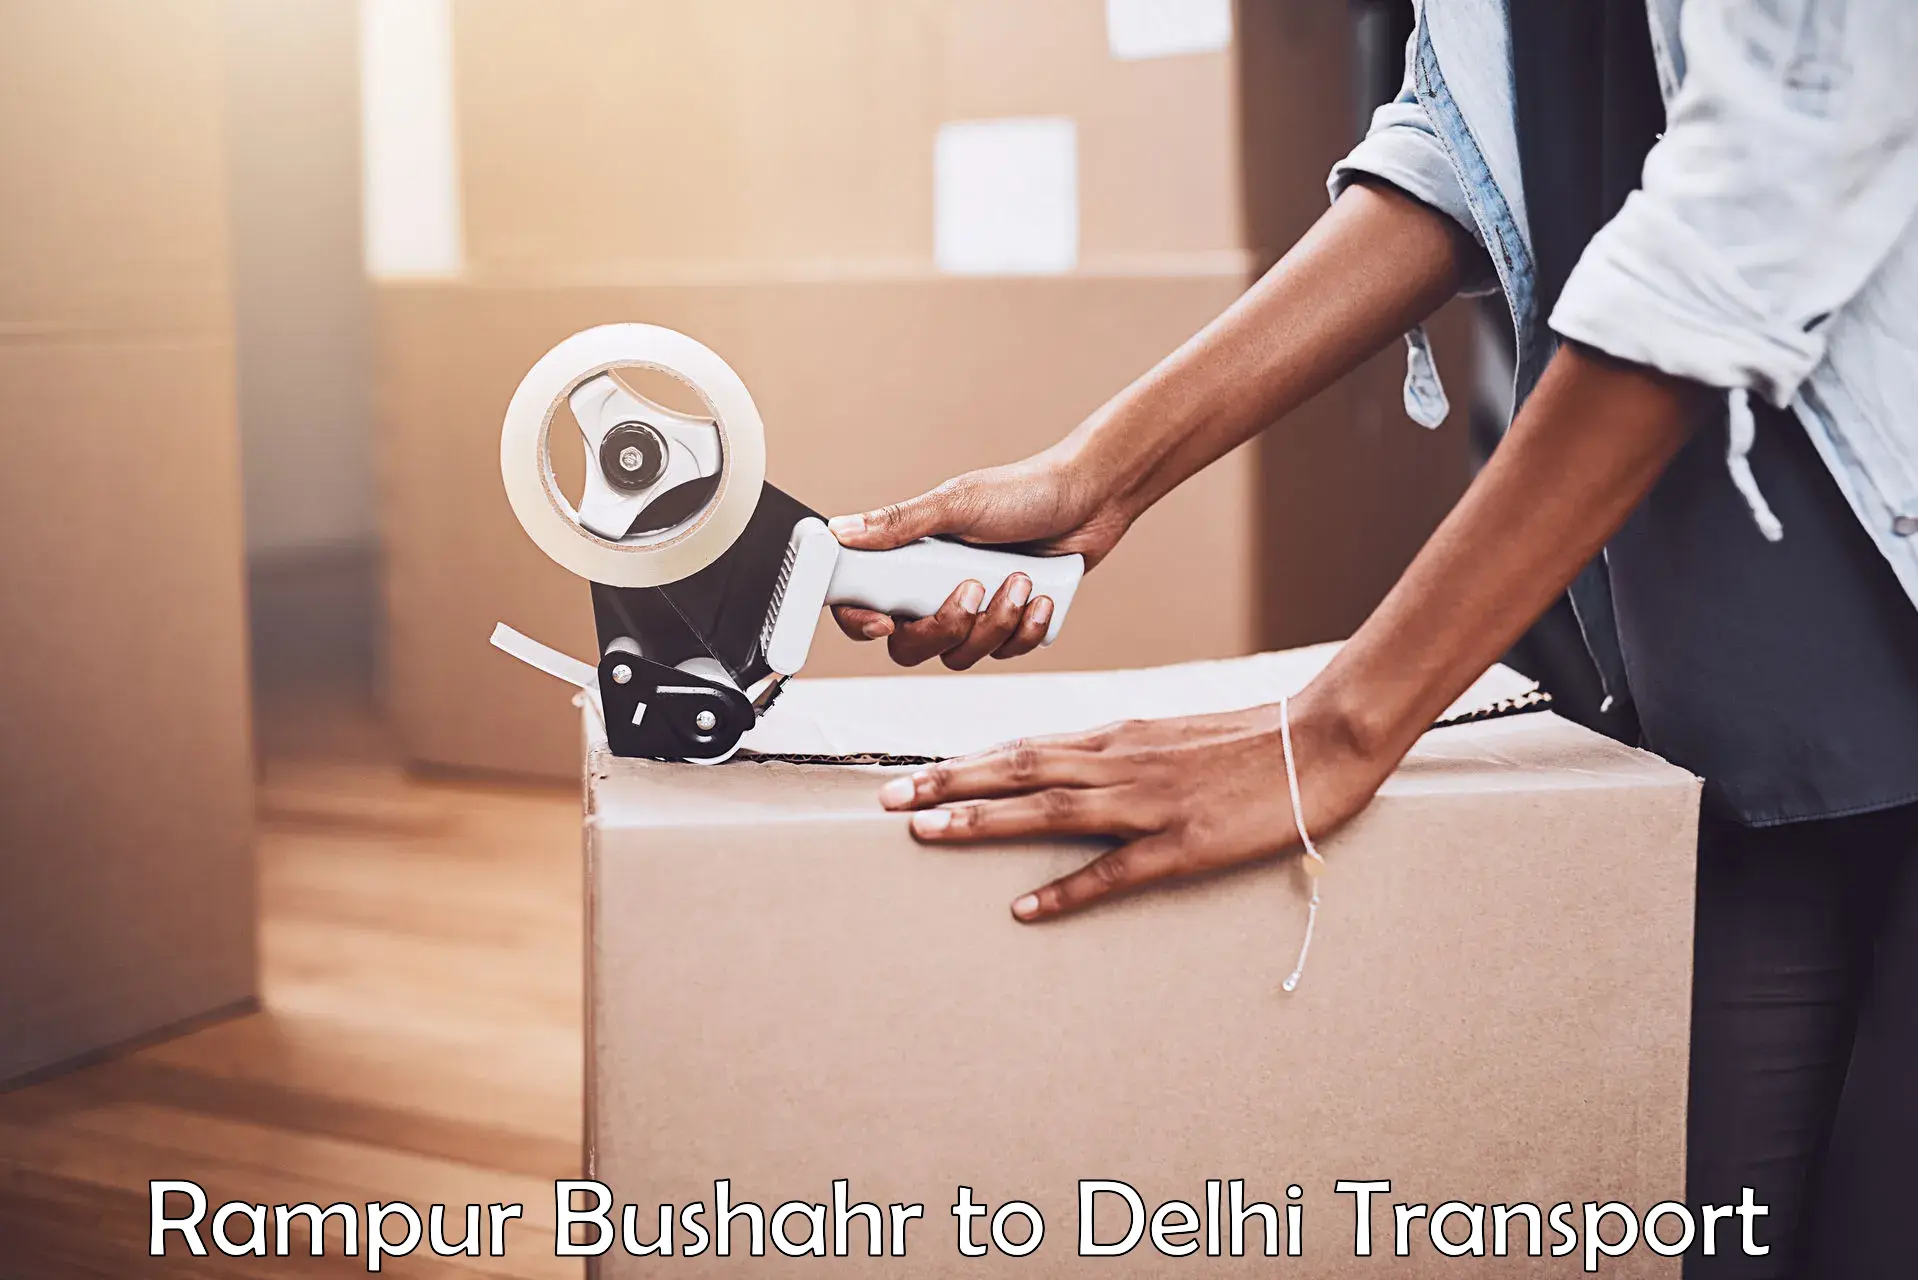 Shipping partner Rampur Bushahr to University of Delhi